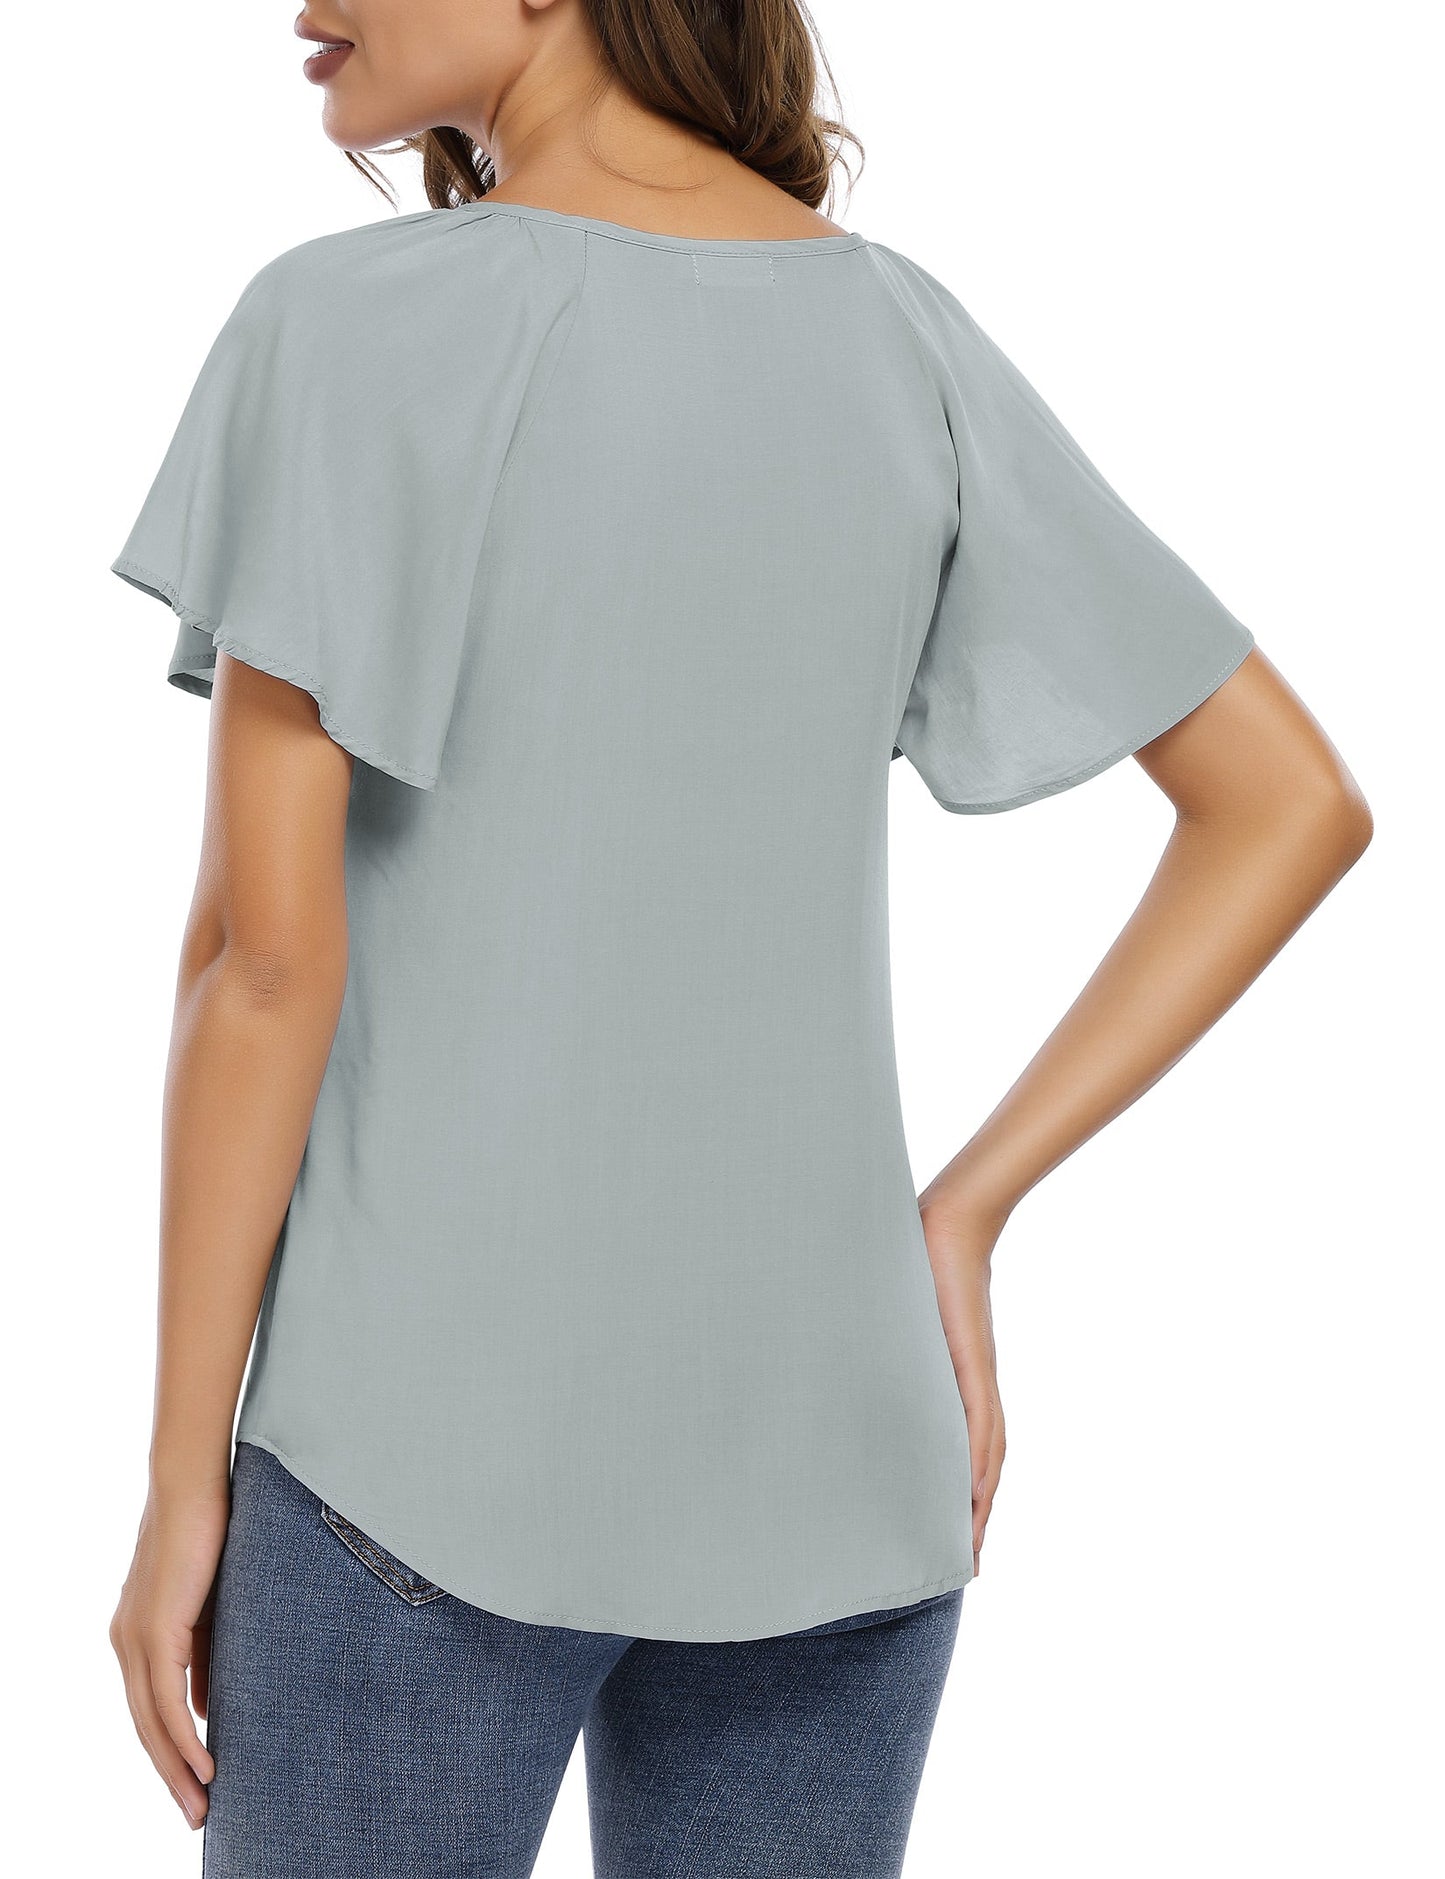 YESFASHION Women's V Neck Top Short Ruffle Drawstring Shirt Grey